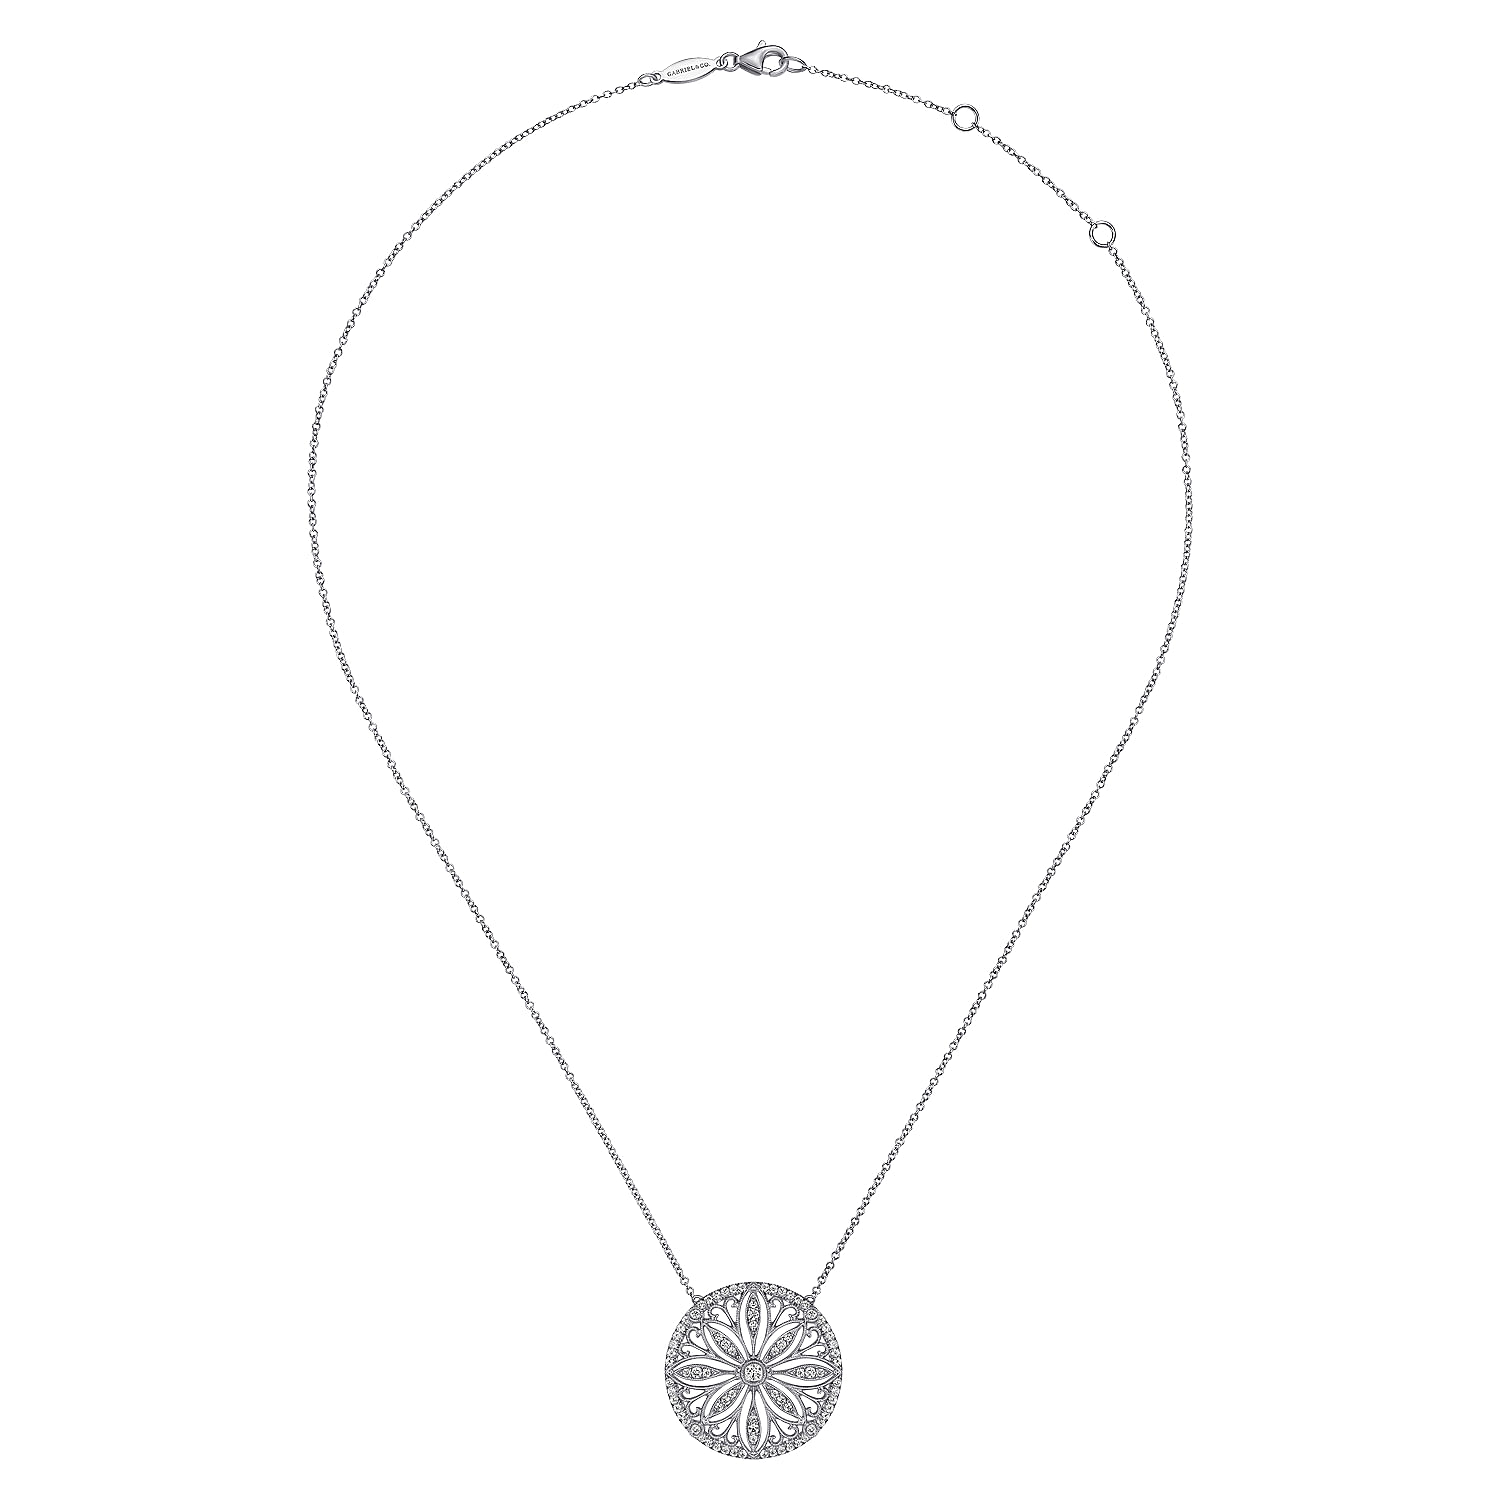 Vintage Inspired 14K White Gold Floral Diamond Pendant Necklace